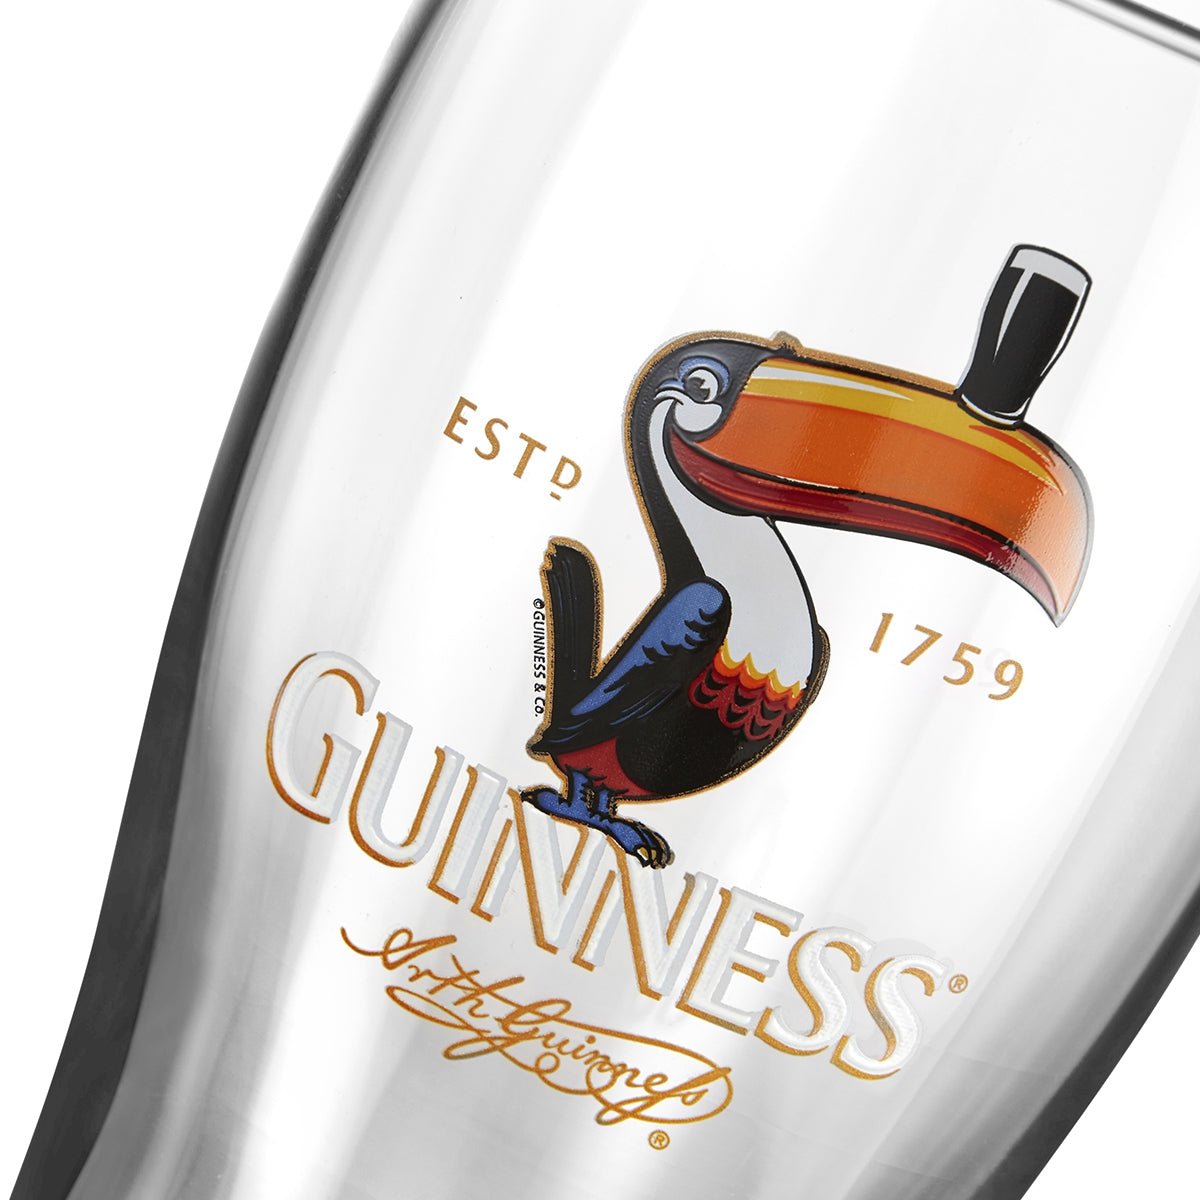 Rare Guinness Toucan Harp Design Pint BEER Glass Lovely Day for a Guiness